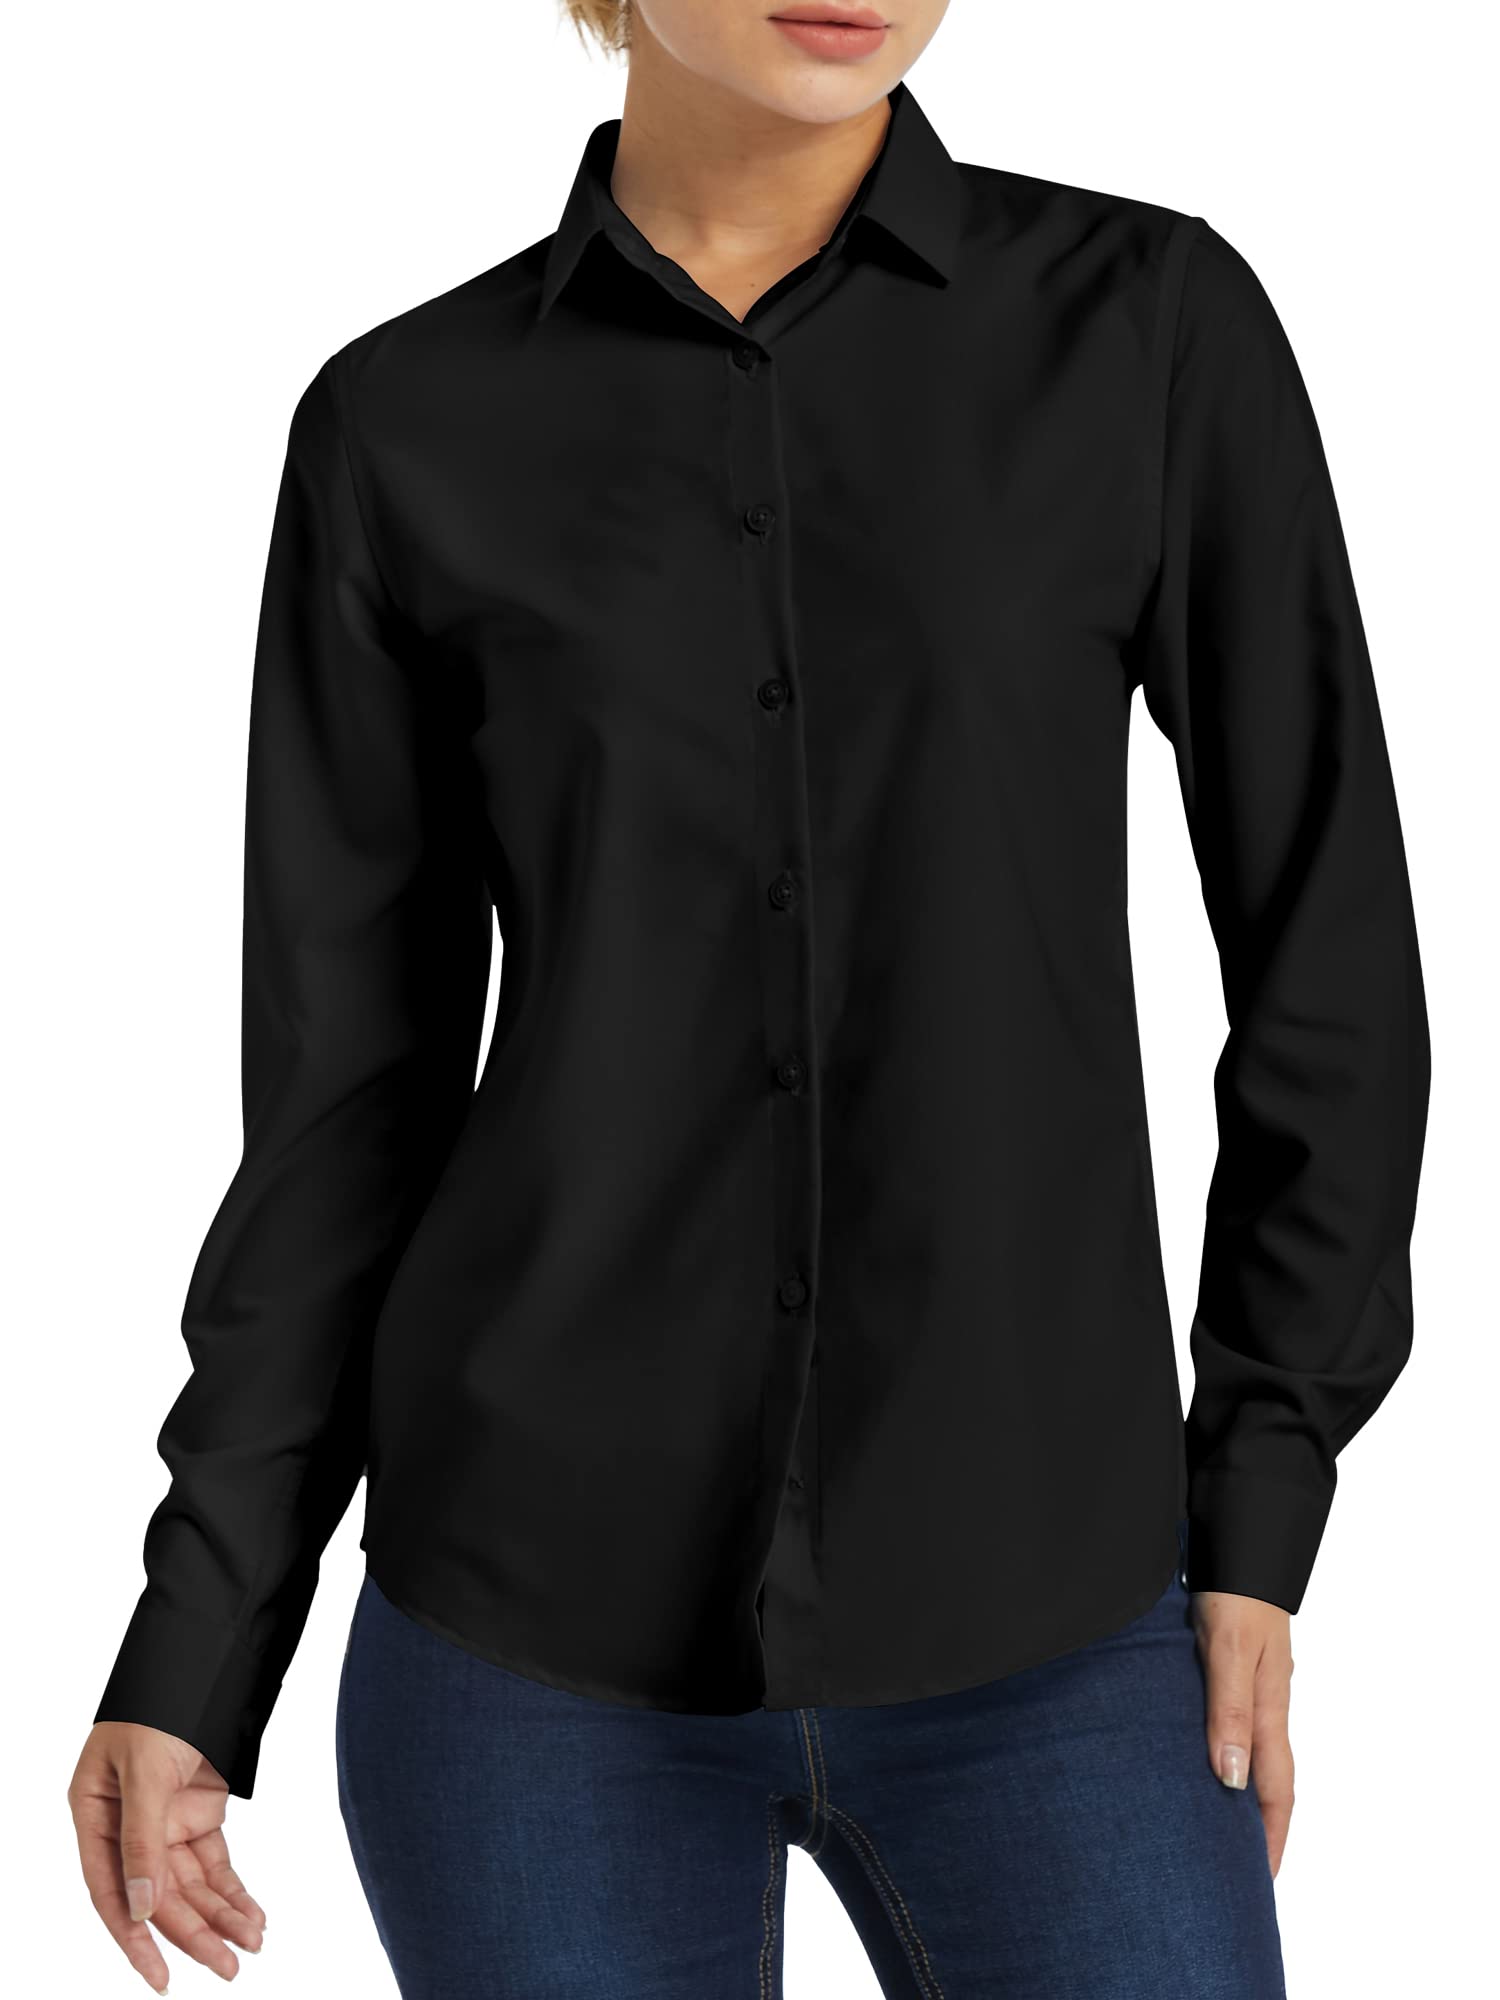 Ruisin Modal Soft Wrinkle Free Button Down Shirts for Women Short/Long Sleeve Formal Work Dress Blouses Tops